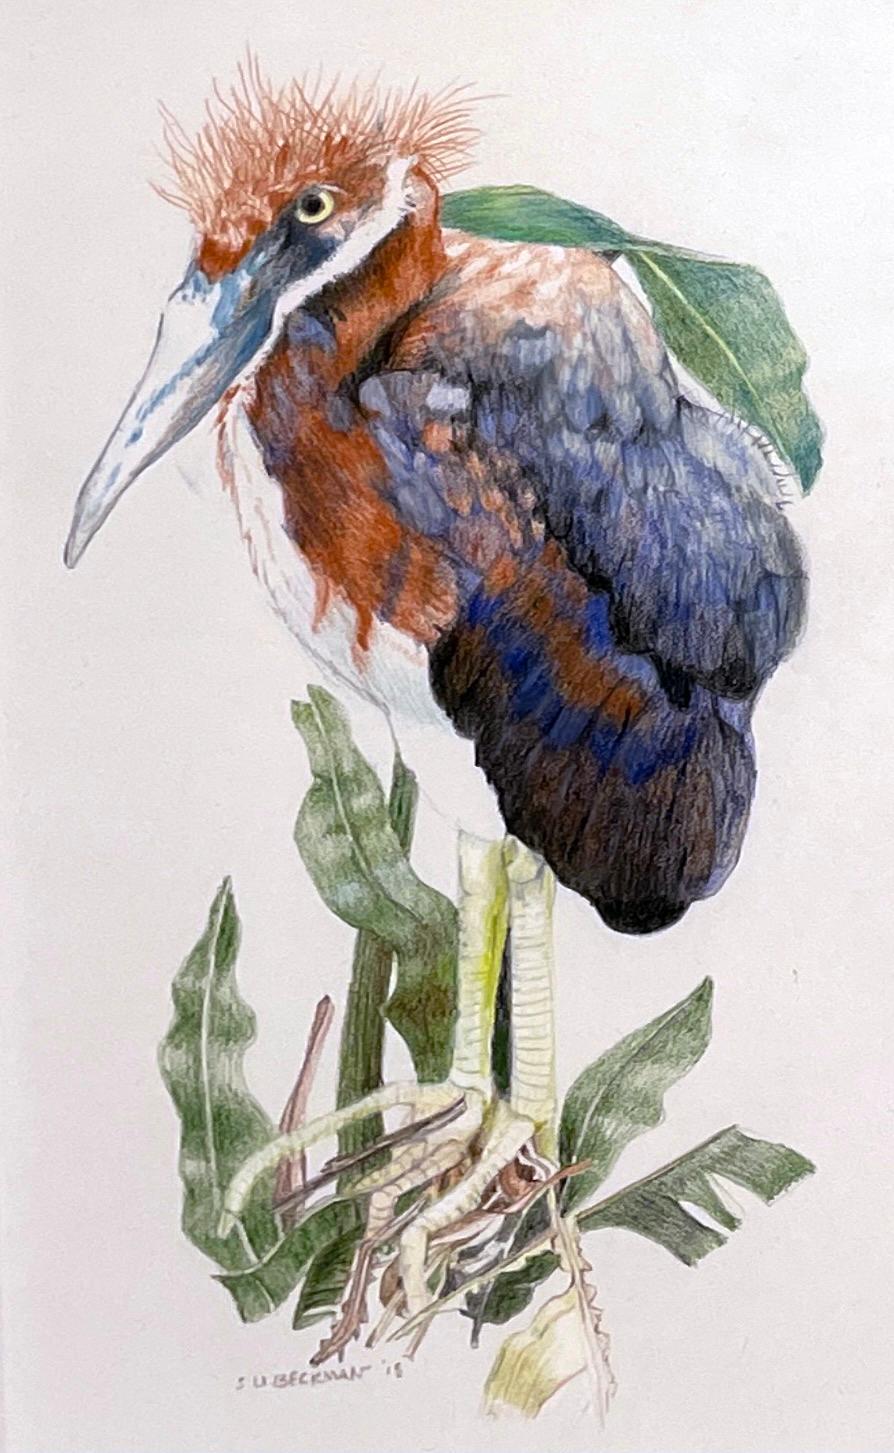 Sylvia Beckman Animal Art - Herony III - color pencil drawing of newly hatched Heron